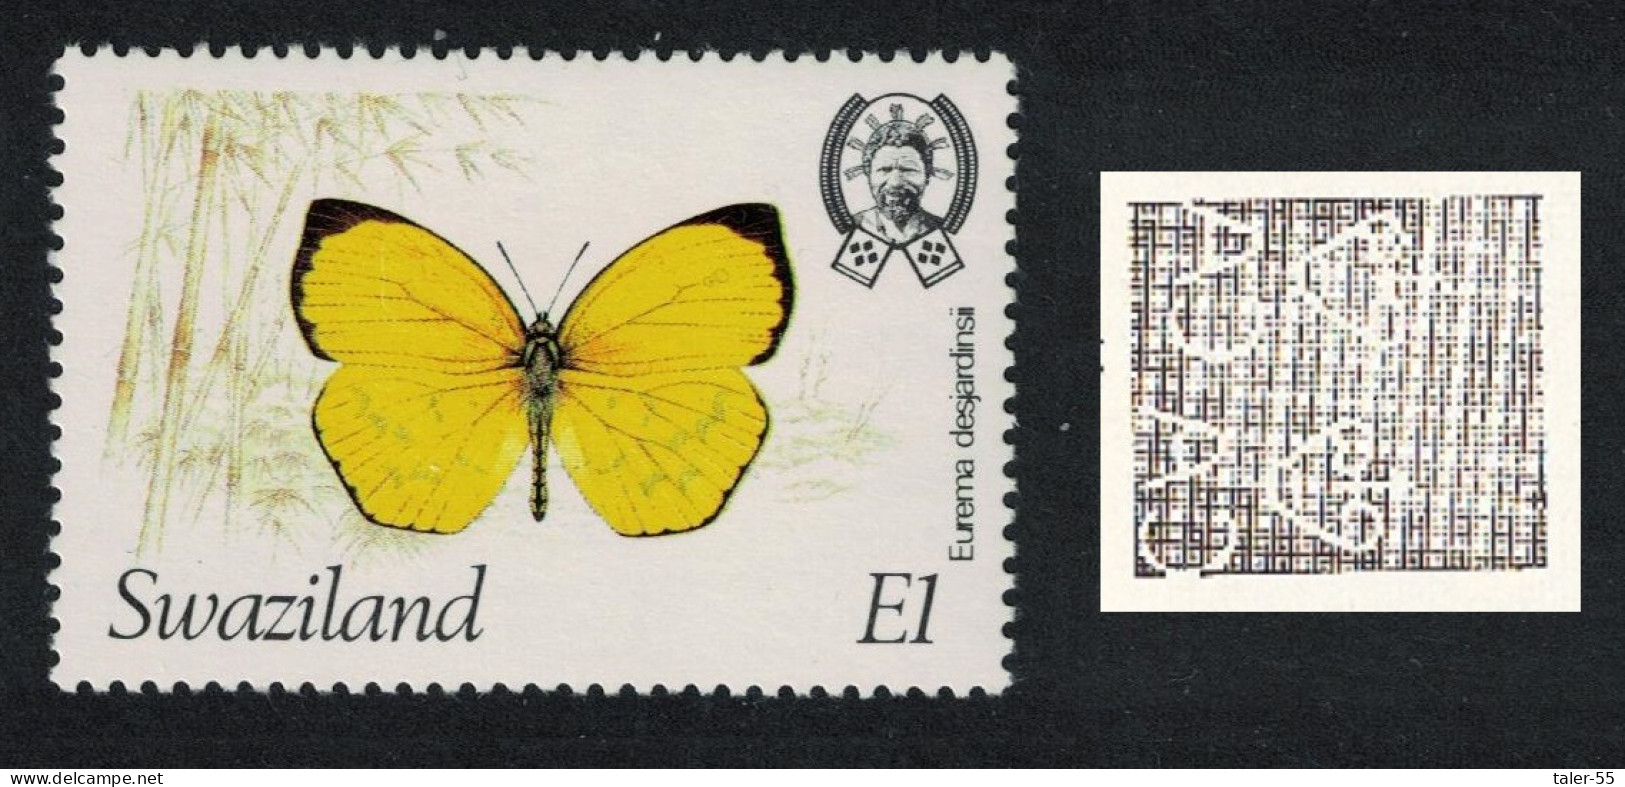 Swaziland Butterfly 'Terias Desjardinsii' E1 Wmk Crown To Right 1982 MNH SG#396 - Swaziland (1968-...)